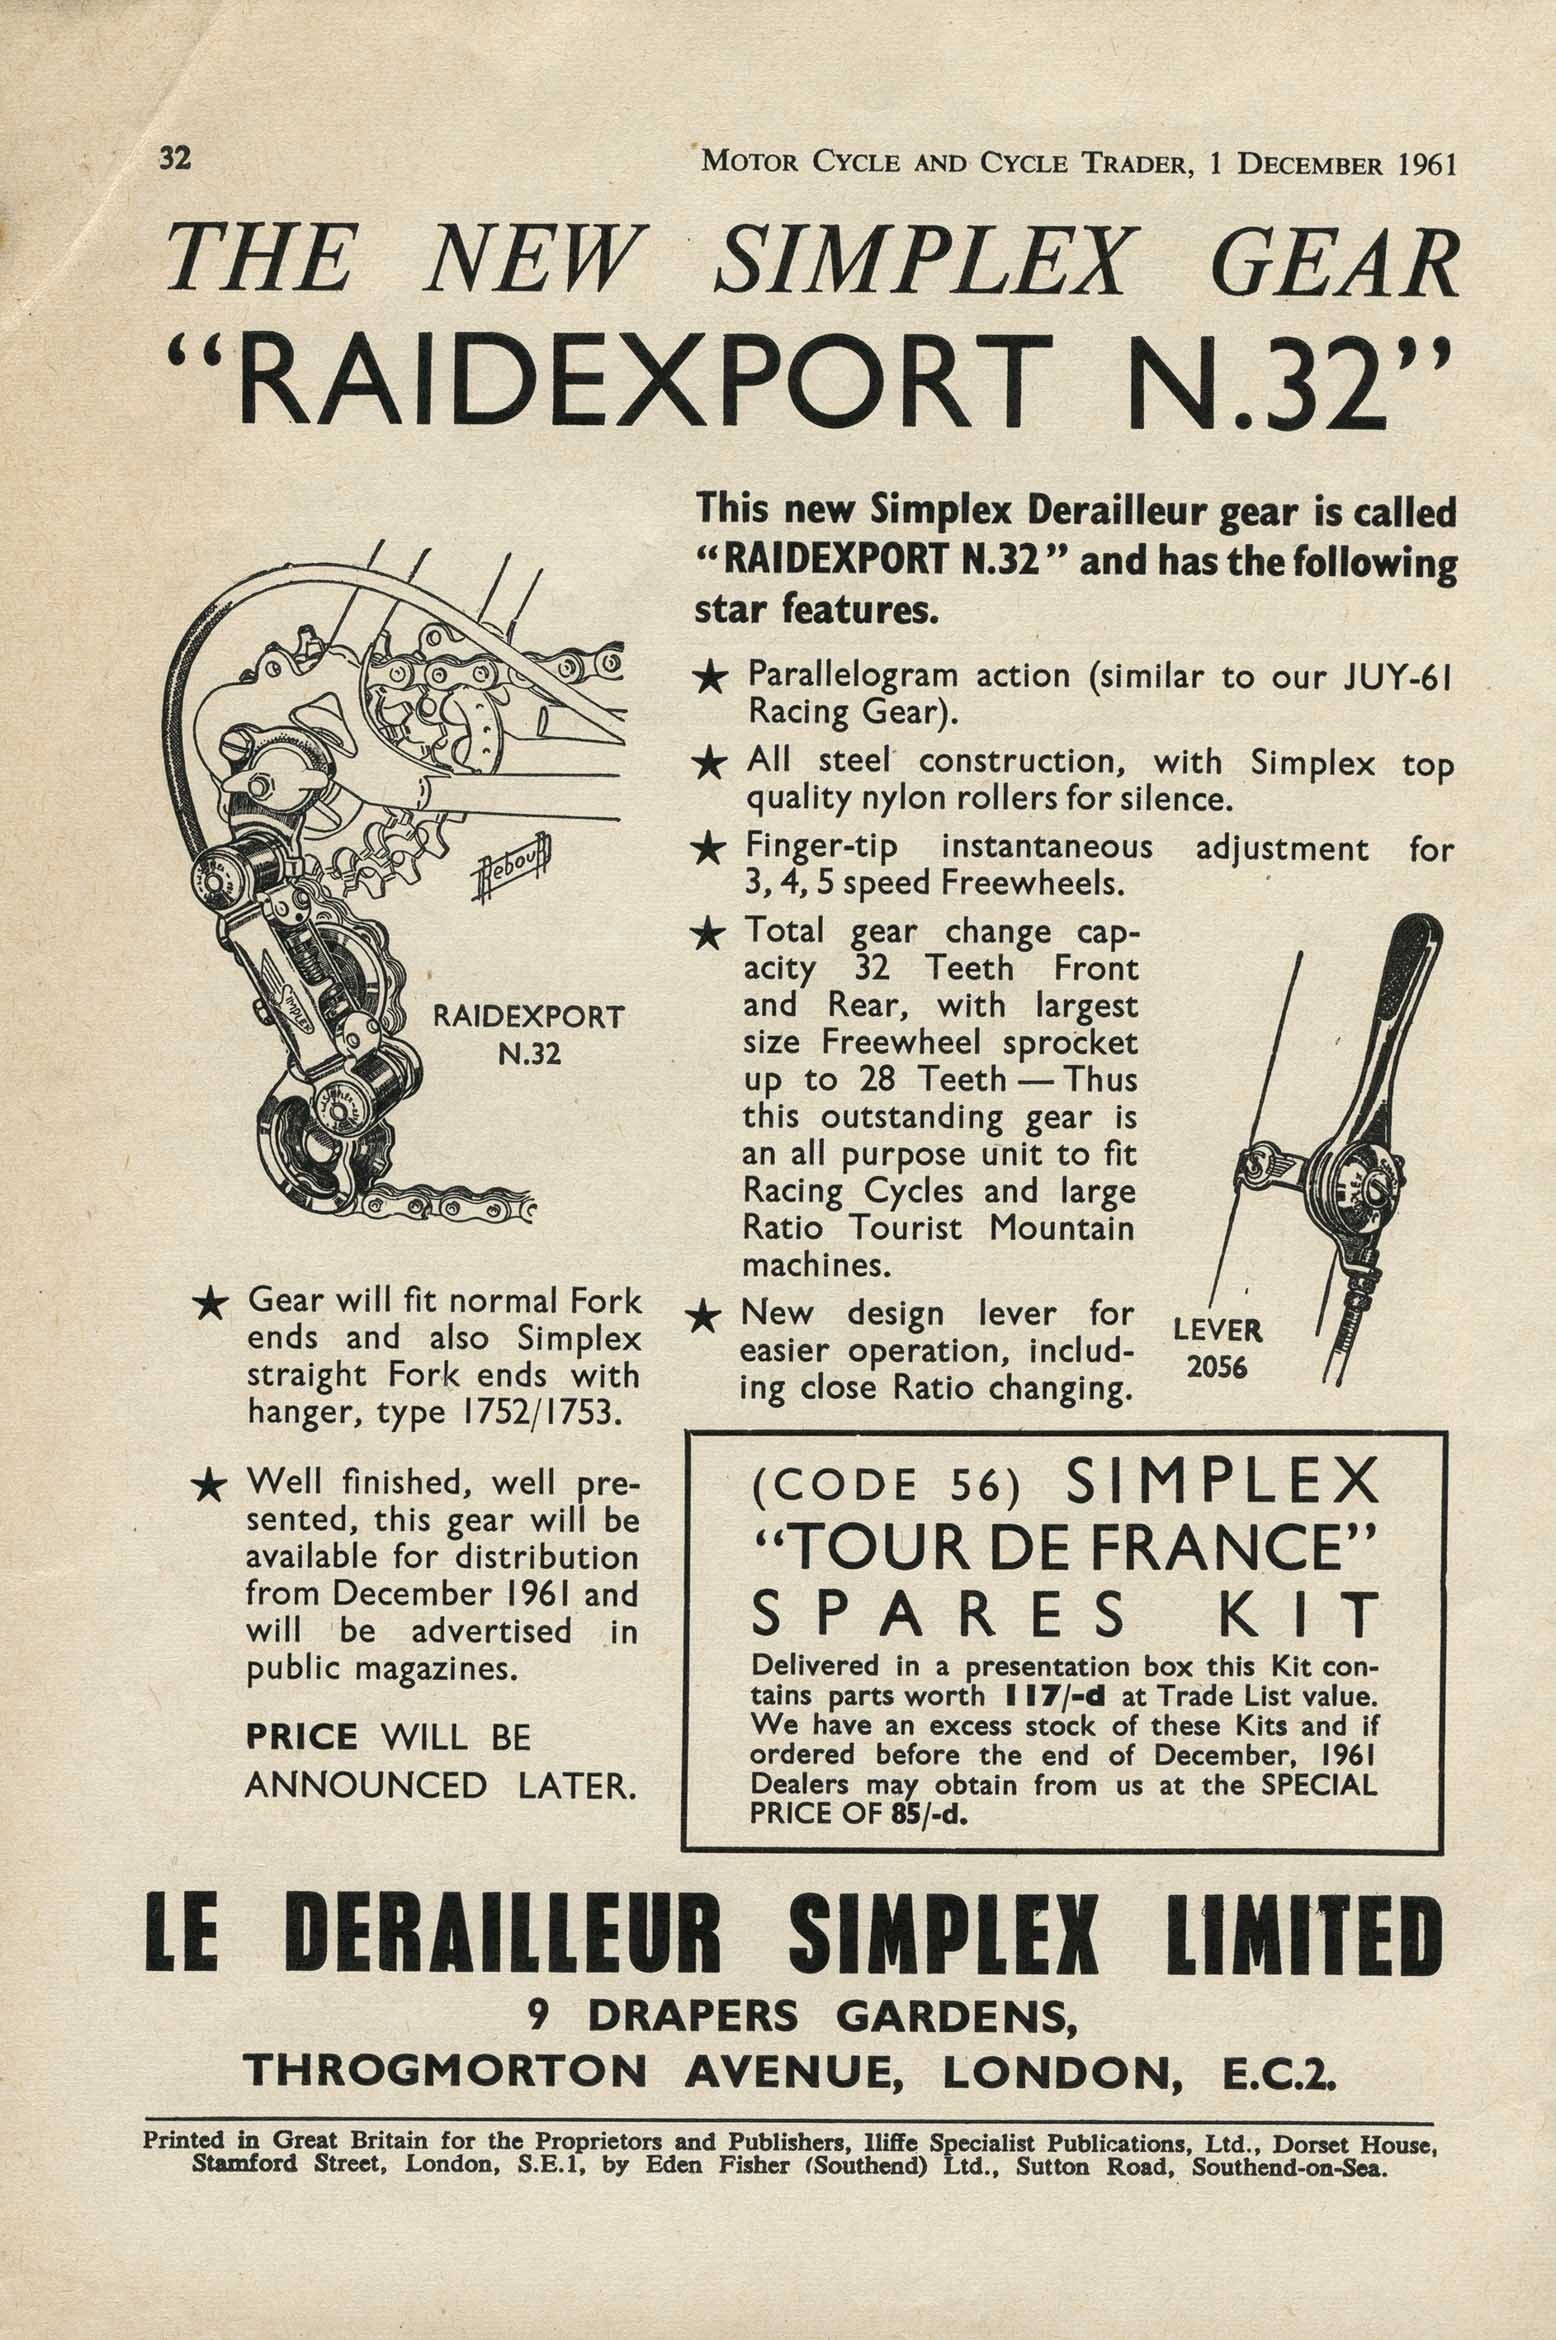 Motor Cycle and Cycle Trader Dec 1961 - Simplex ad main image